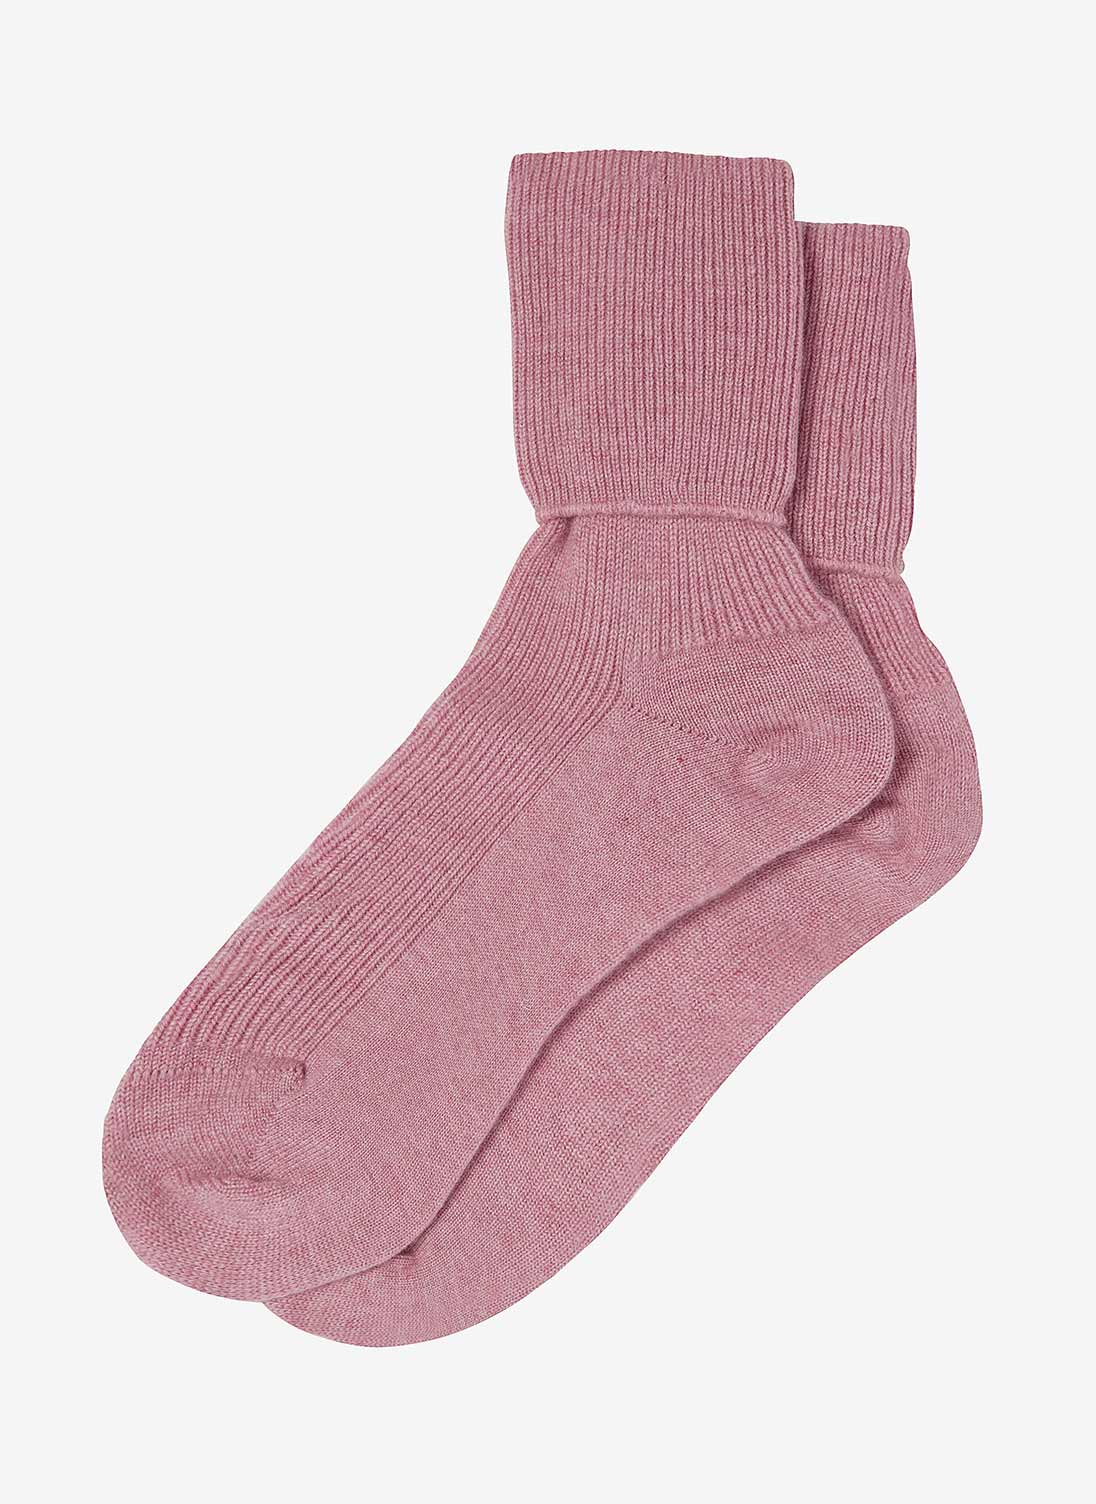 Women's Cashmere Socks Wild rose